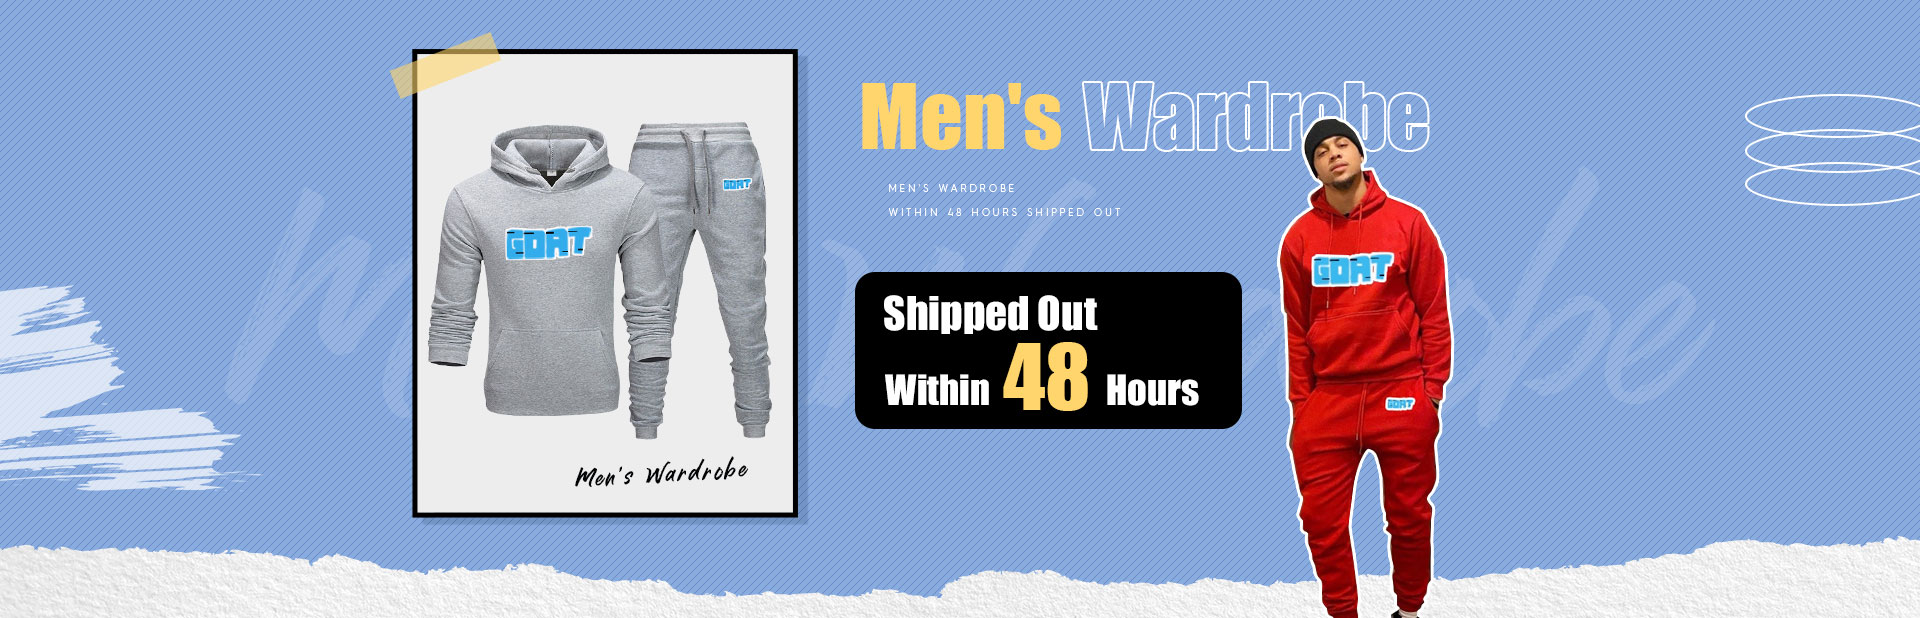 Men's Wardrobe 11.07